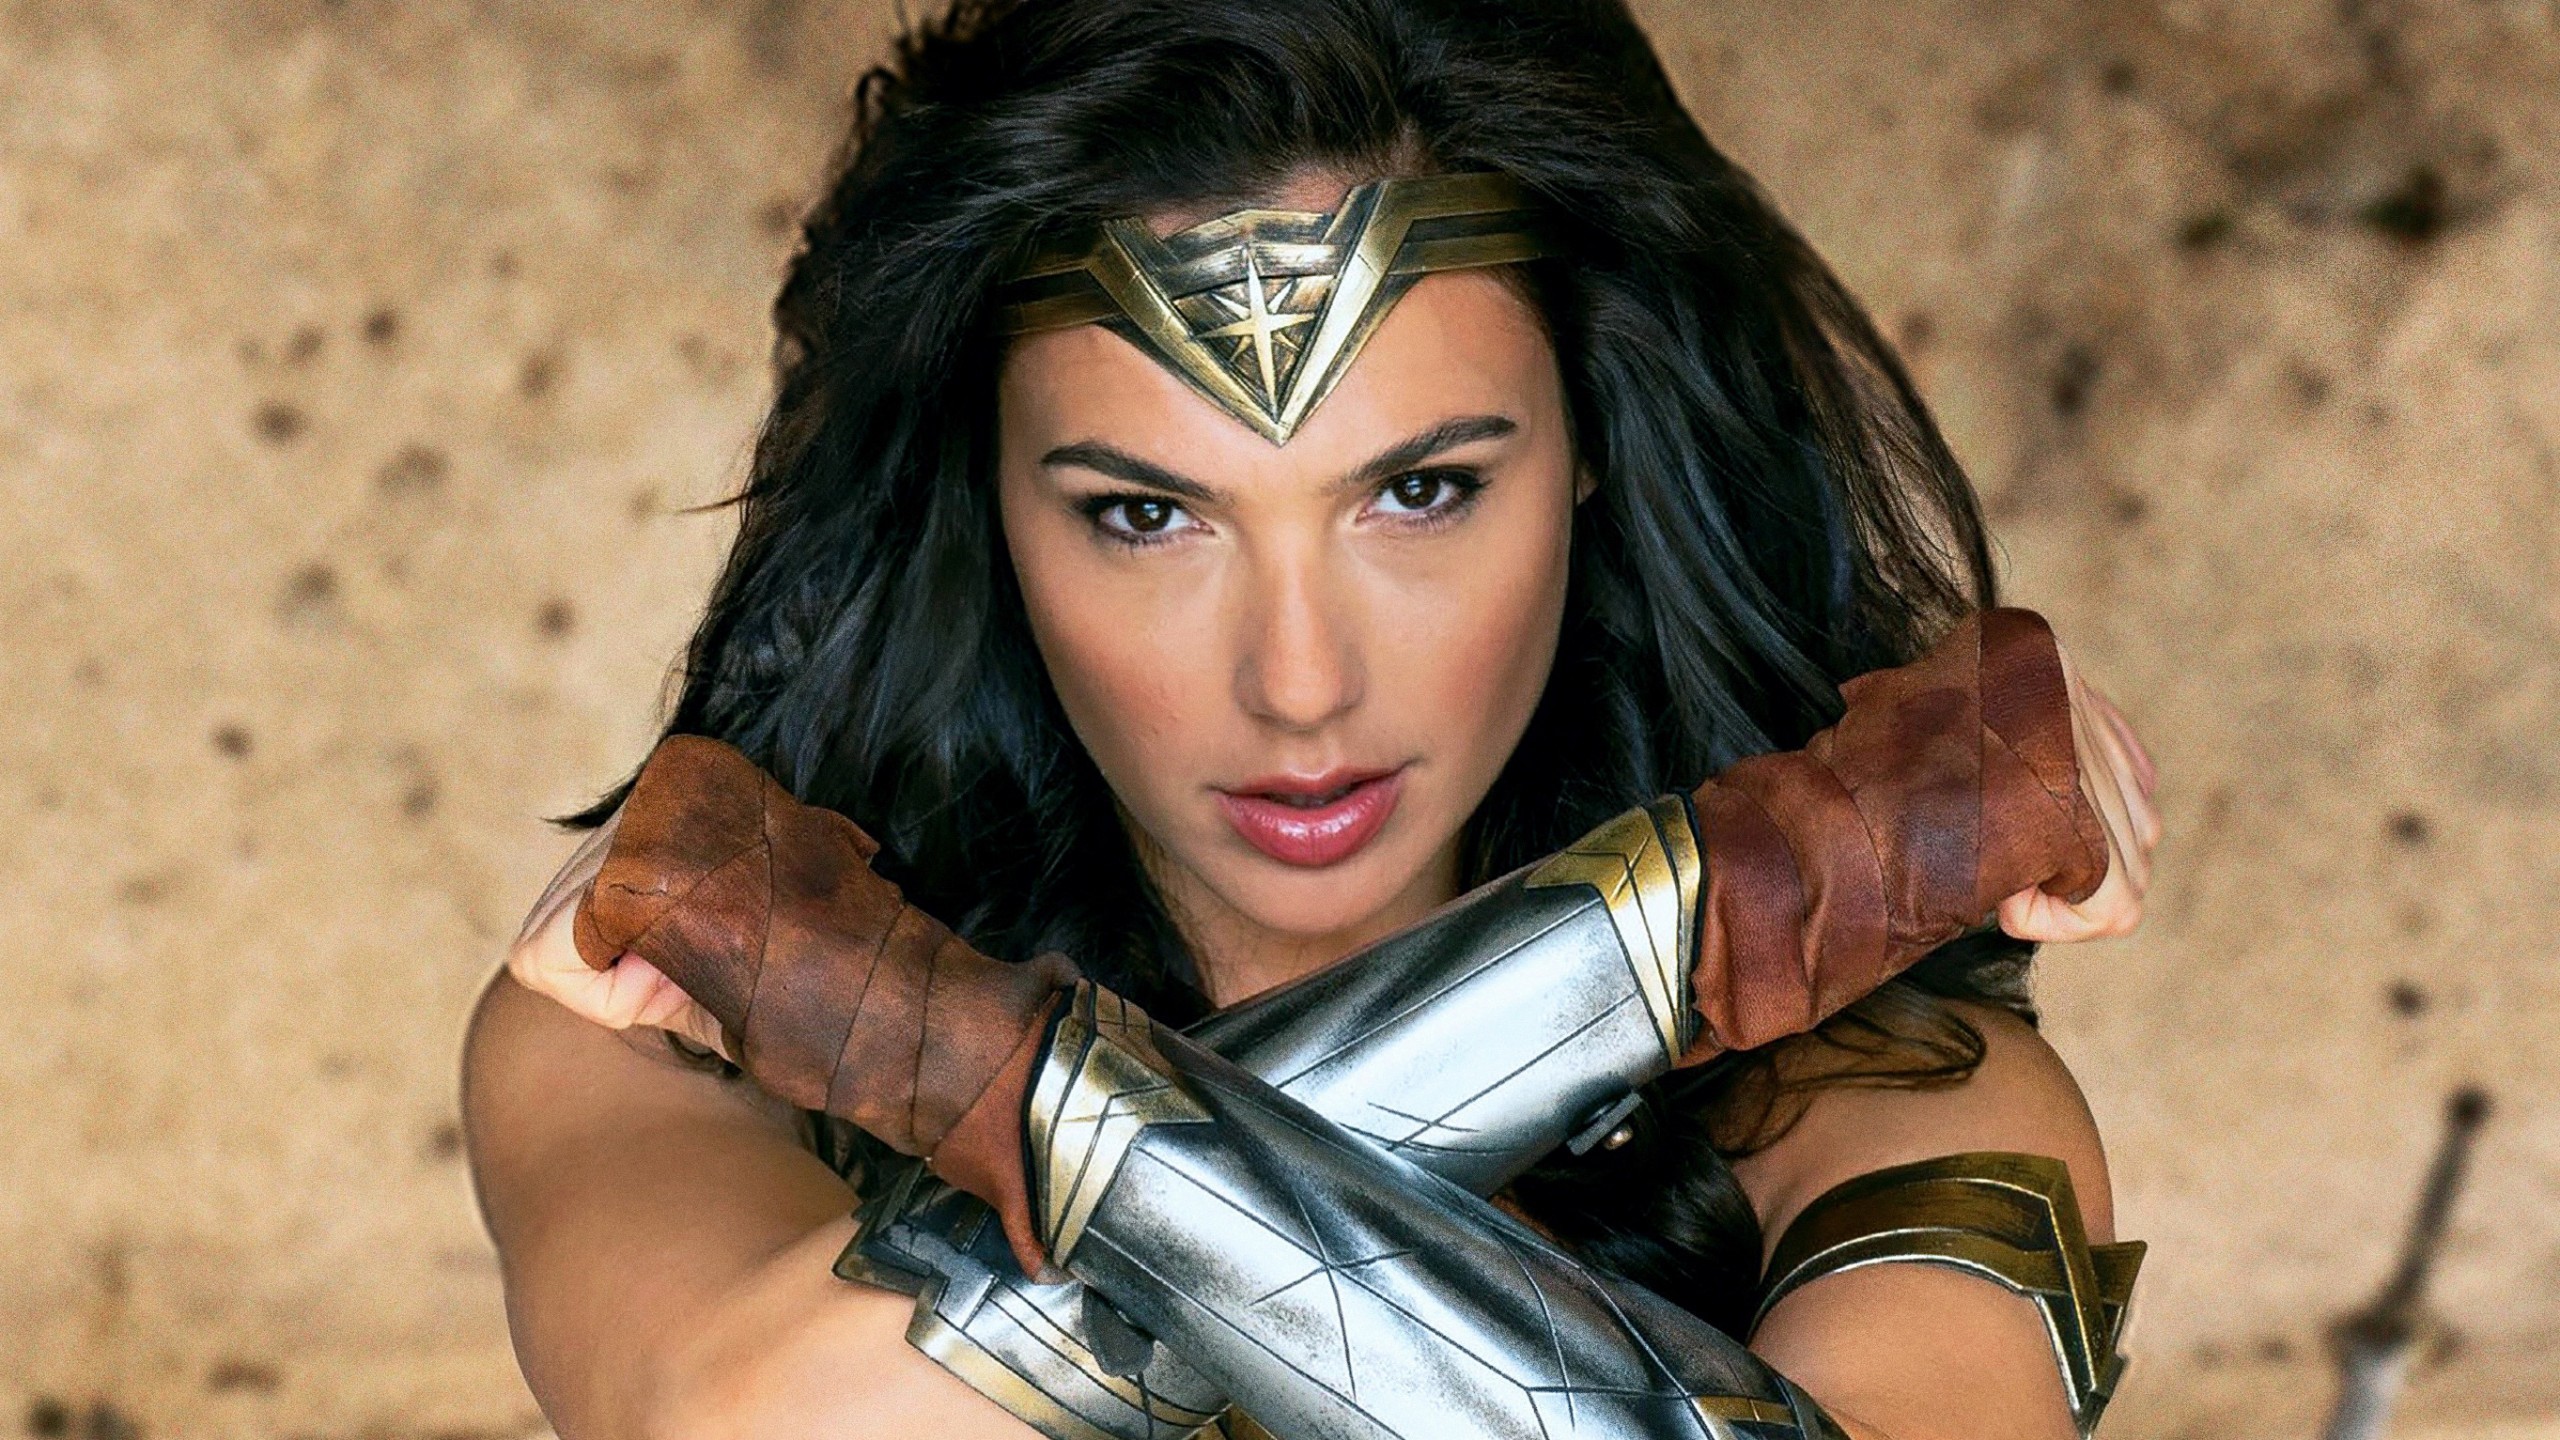 2560x1440 Movies / Gal Gadot Wallpaper. Gal Gadot, Wonder Woman ...